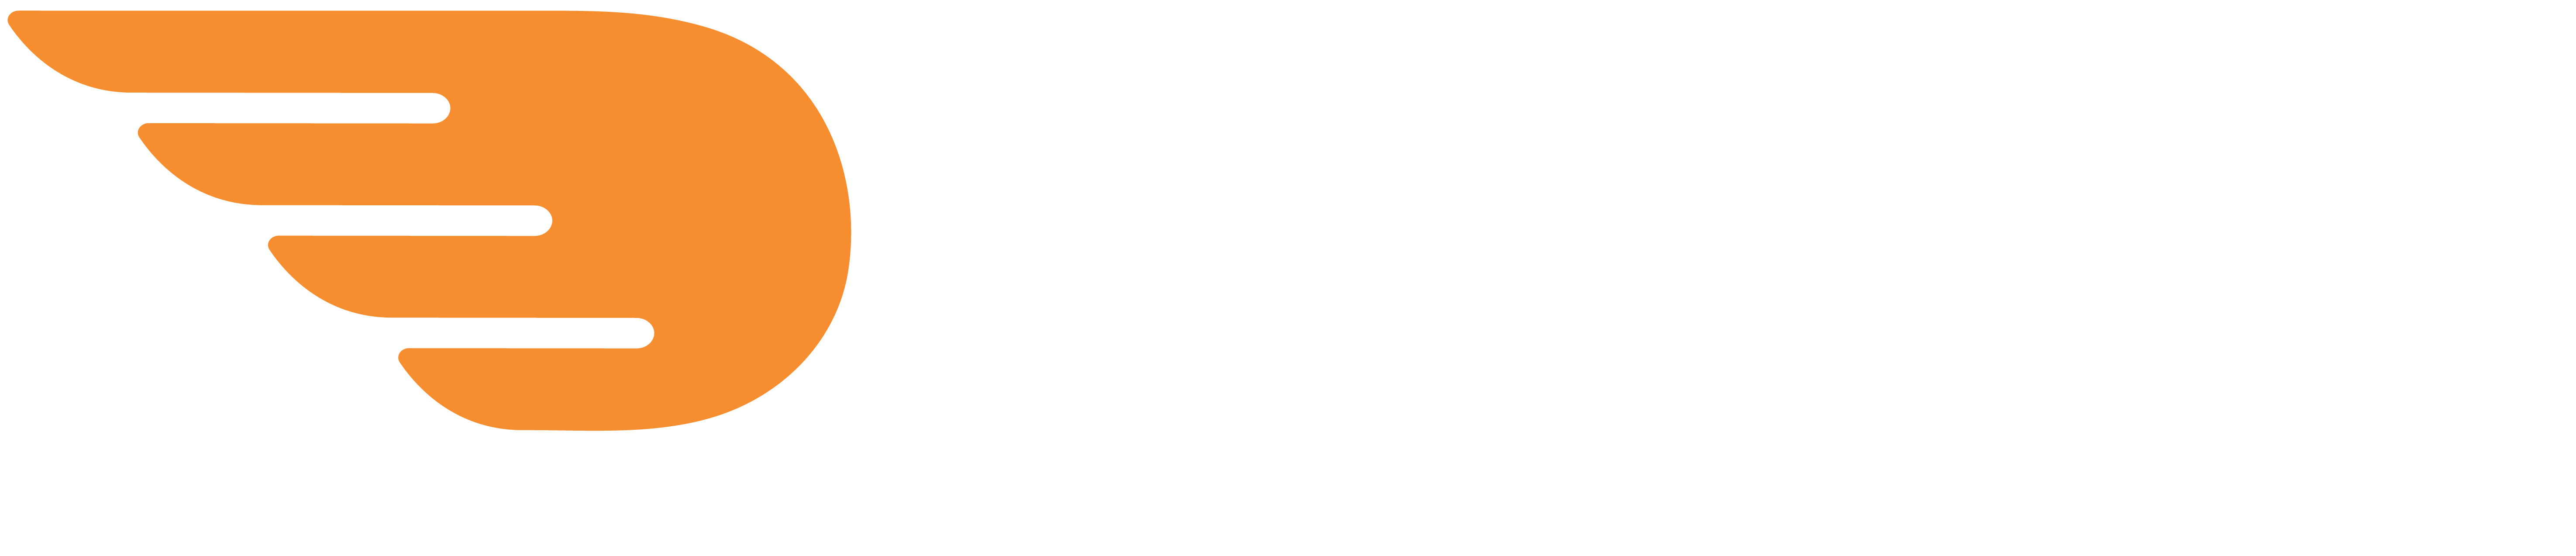 Logomarca Befly